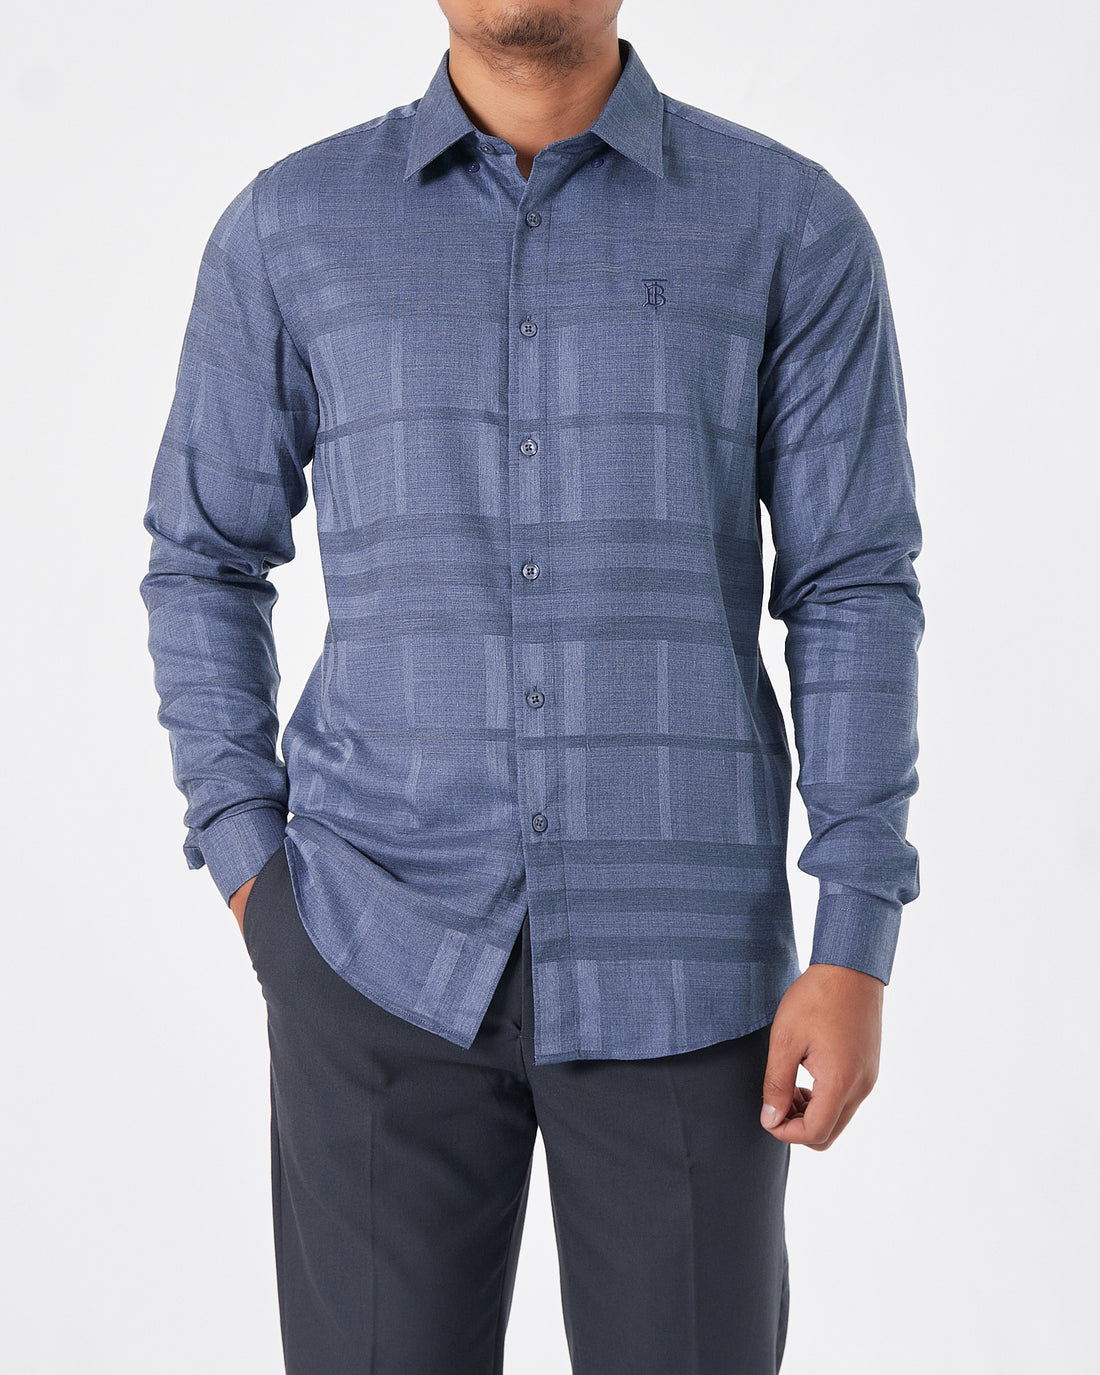 BUR Logo Embroidered Striped Men Blue Shirts Long Sleeve 26.90